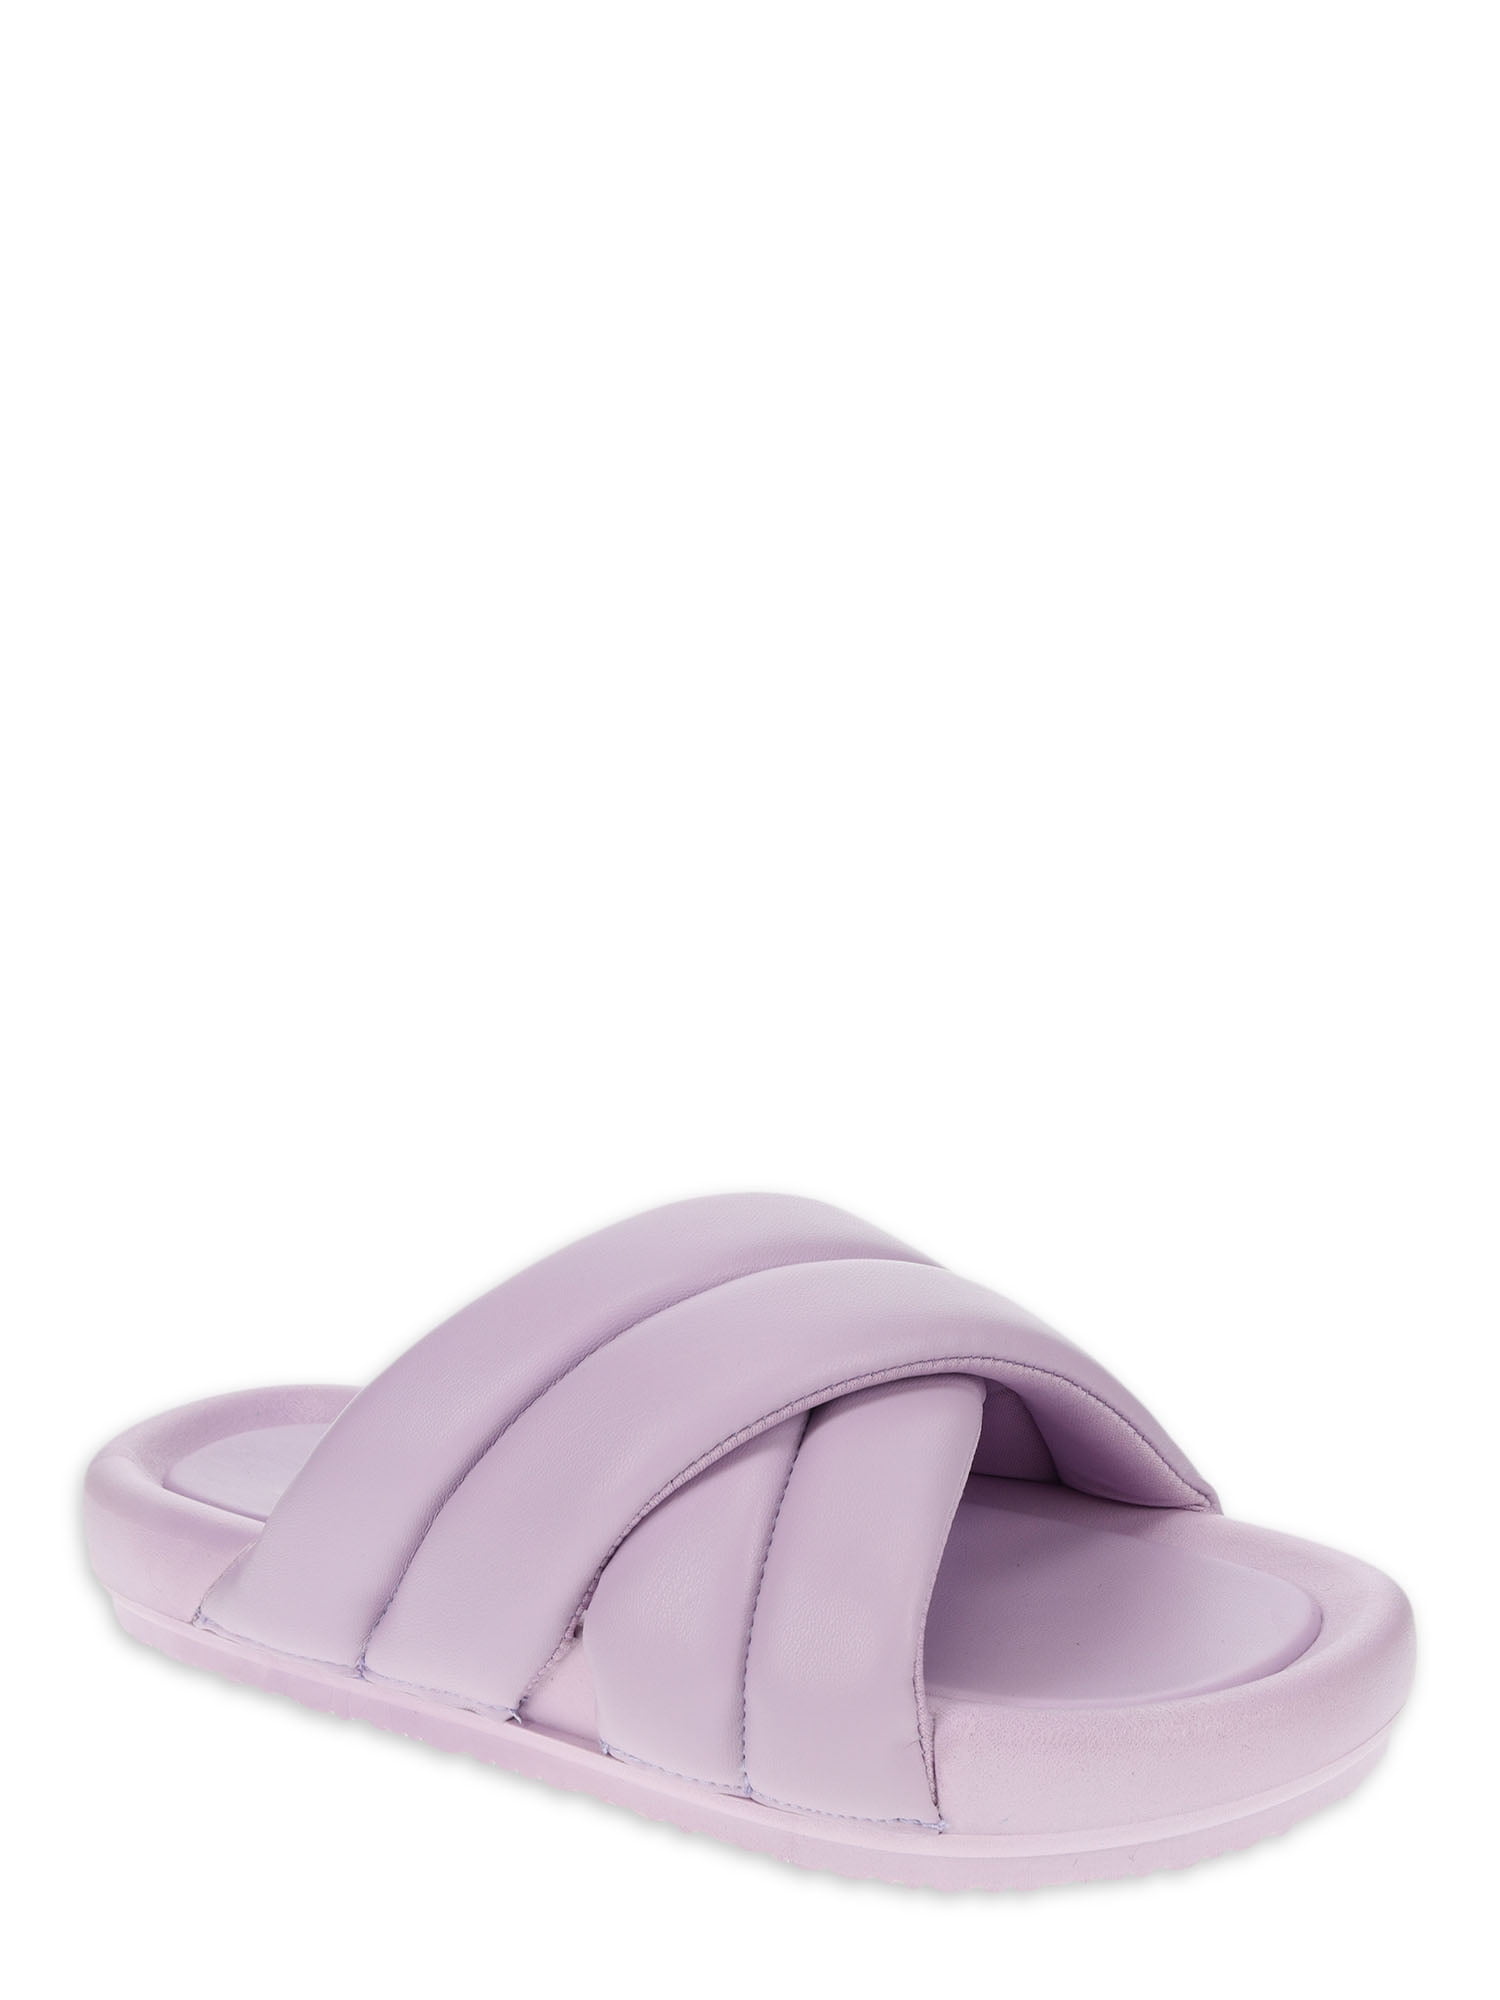 Womens Ladies Flat H Slider Slip On Sandals Comfort Shoes Summer Mule New Size 